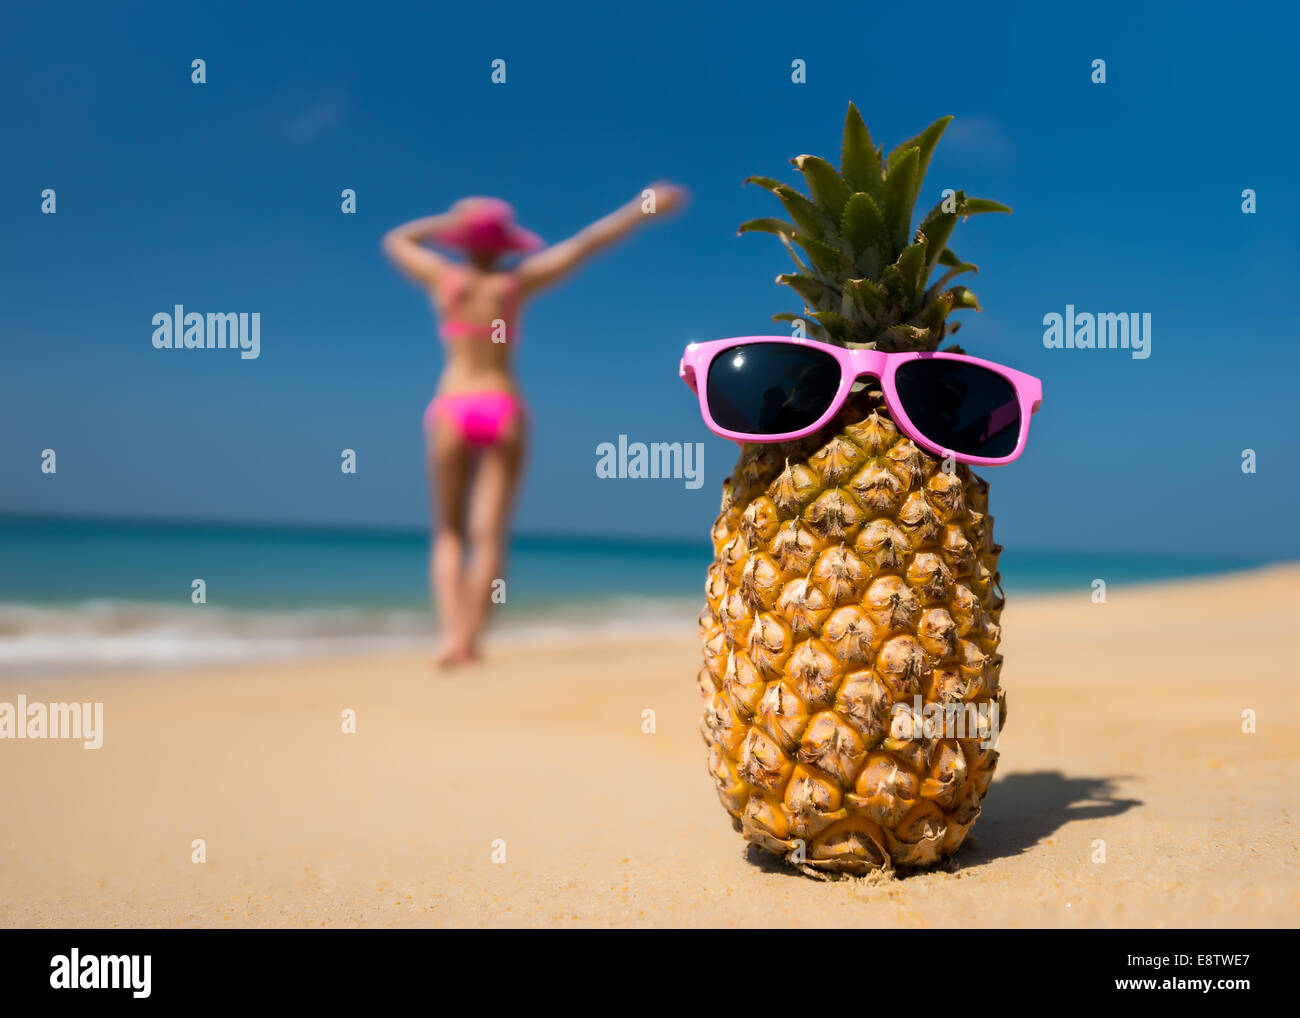 Cheerful pineapple glasses and a woman in a bikini sunbathing on the beach on sea background. Idealistic scene leisure travel. Stock Photo